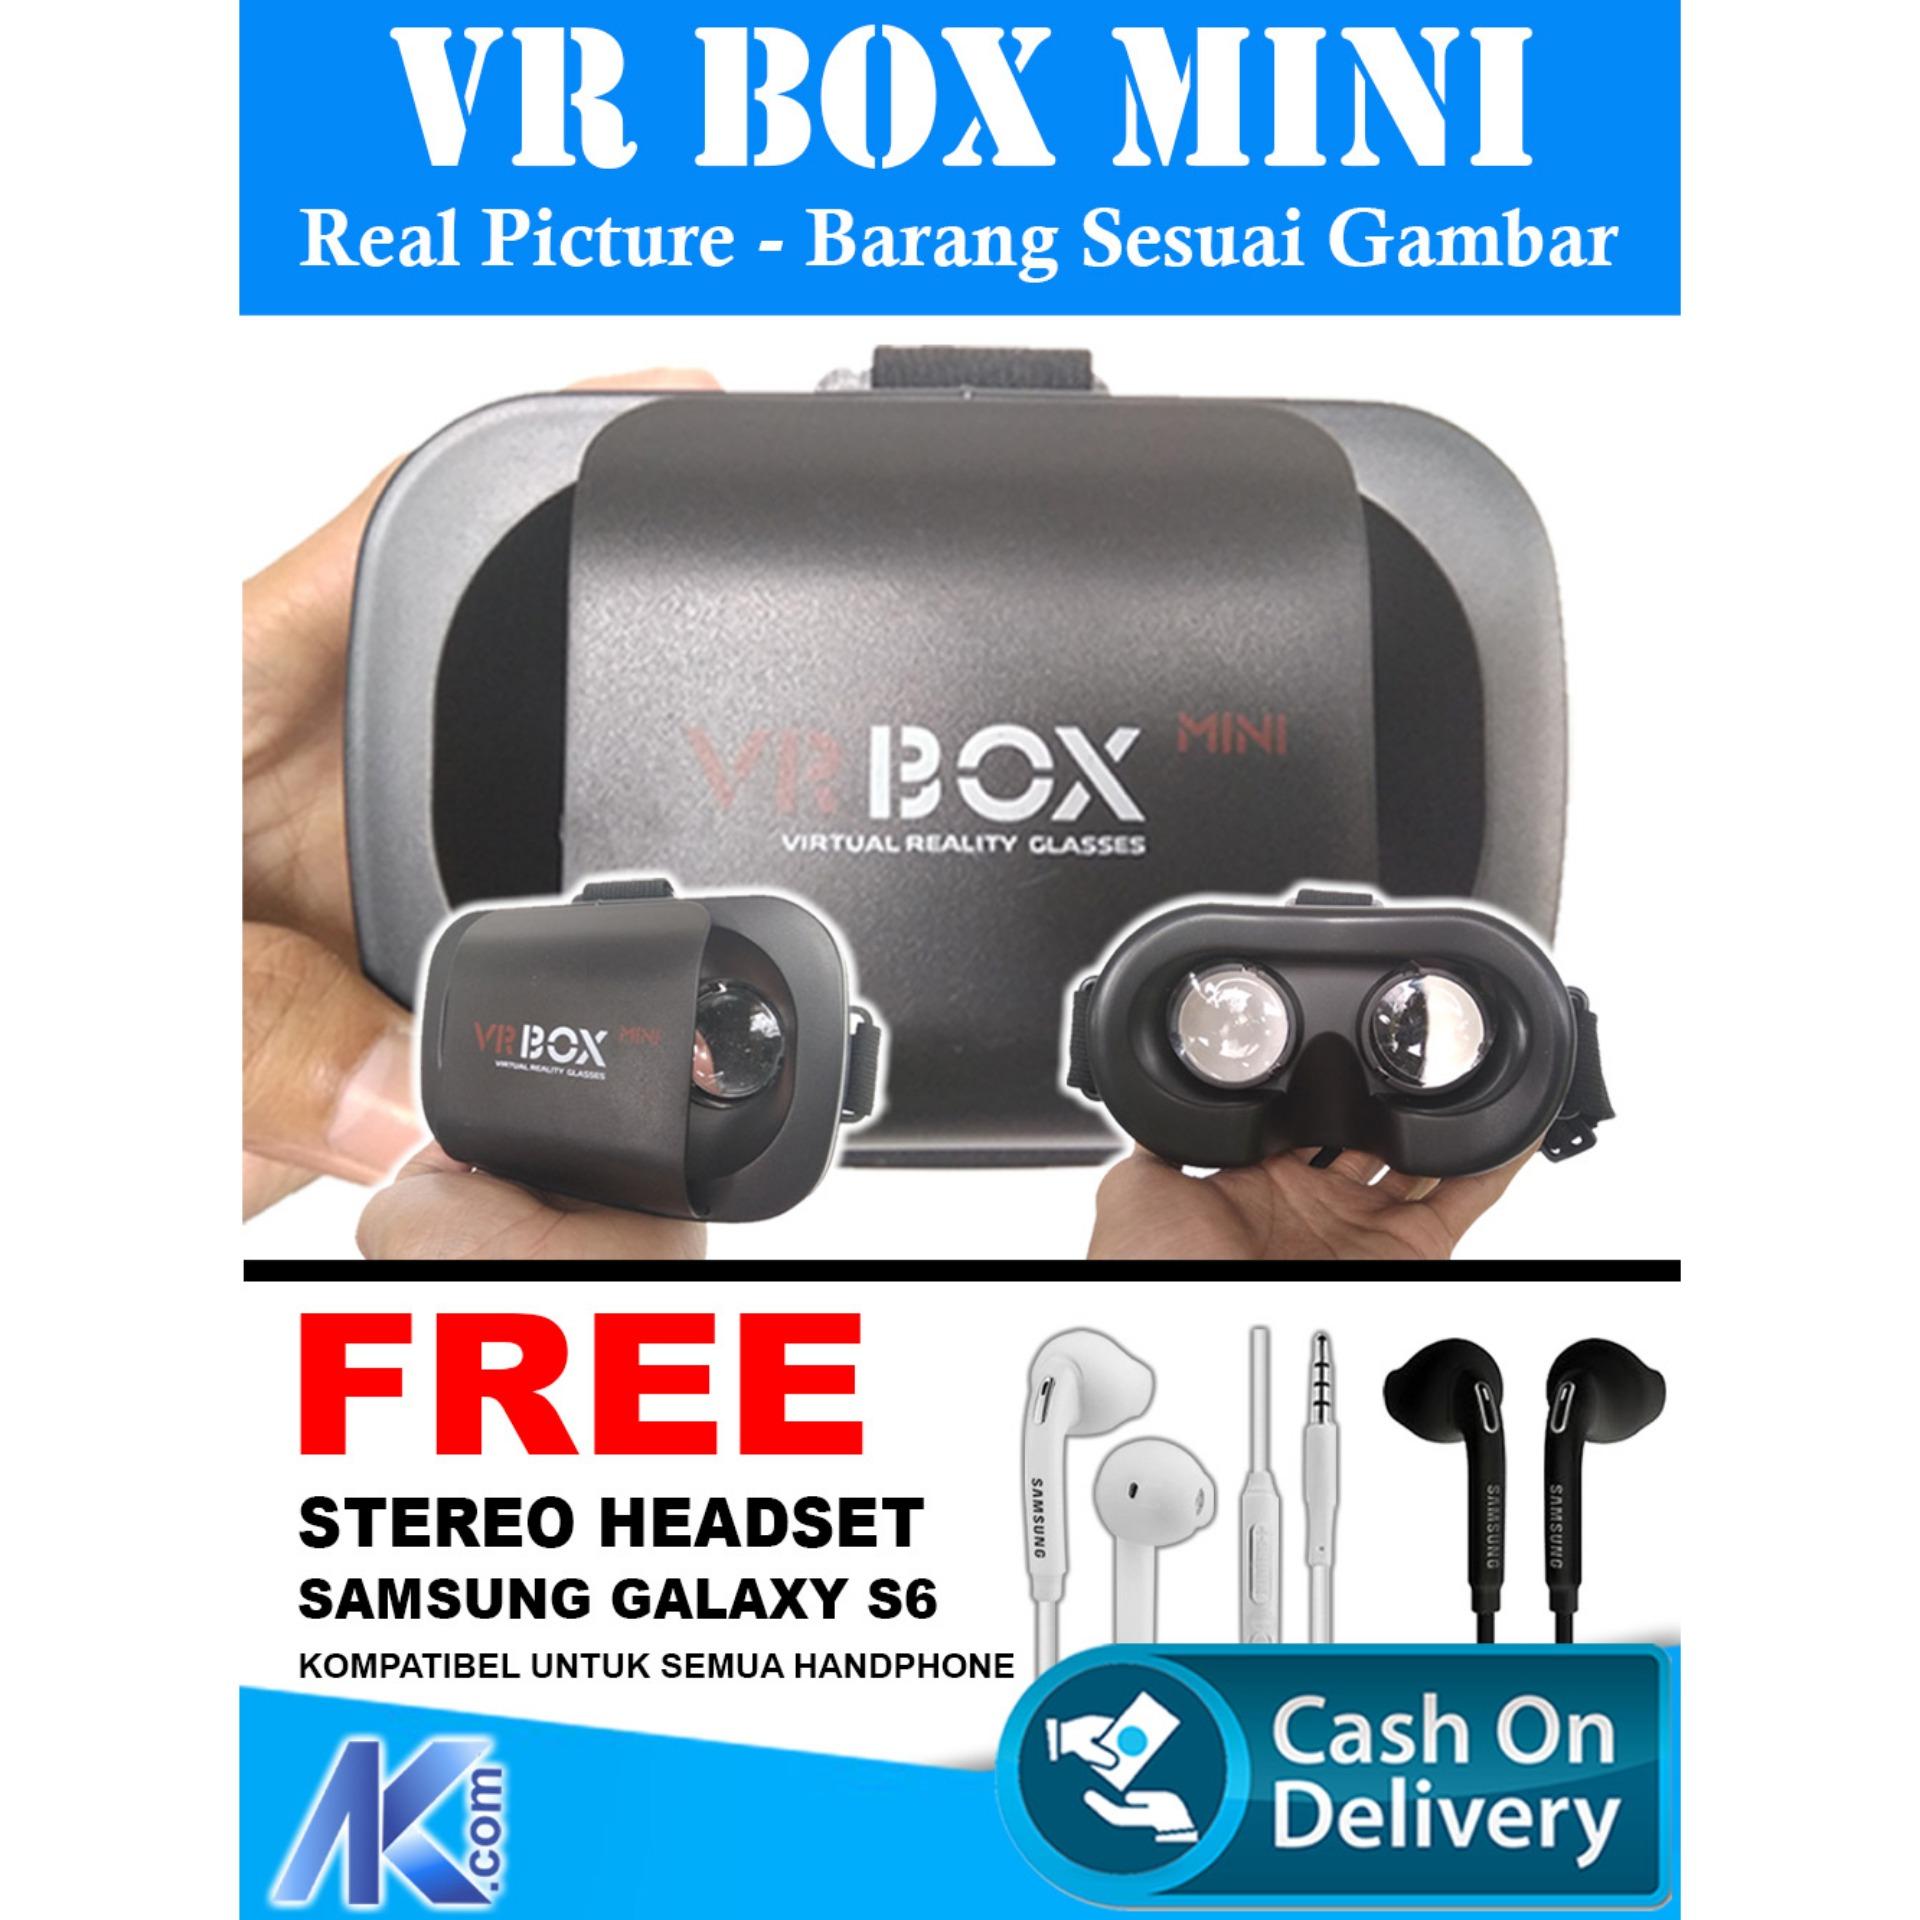 Kelebihan Virtual Reality Glasses Vr Box 3d Glasses Besar Free